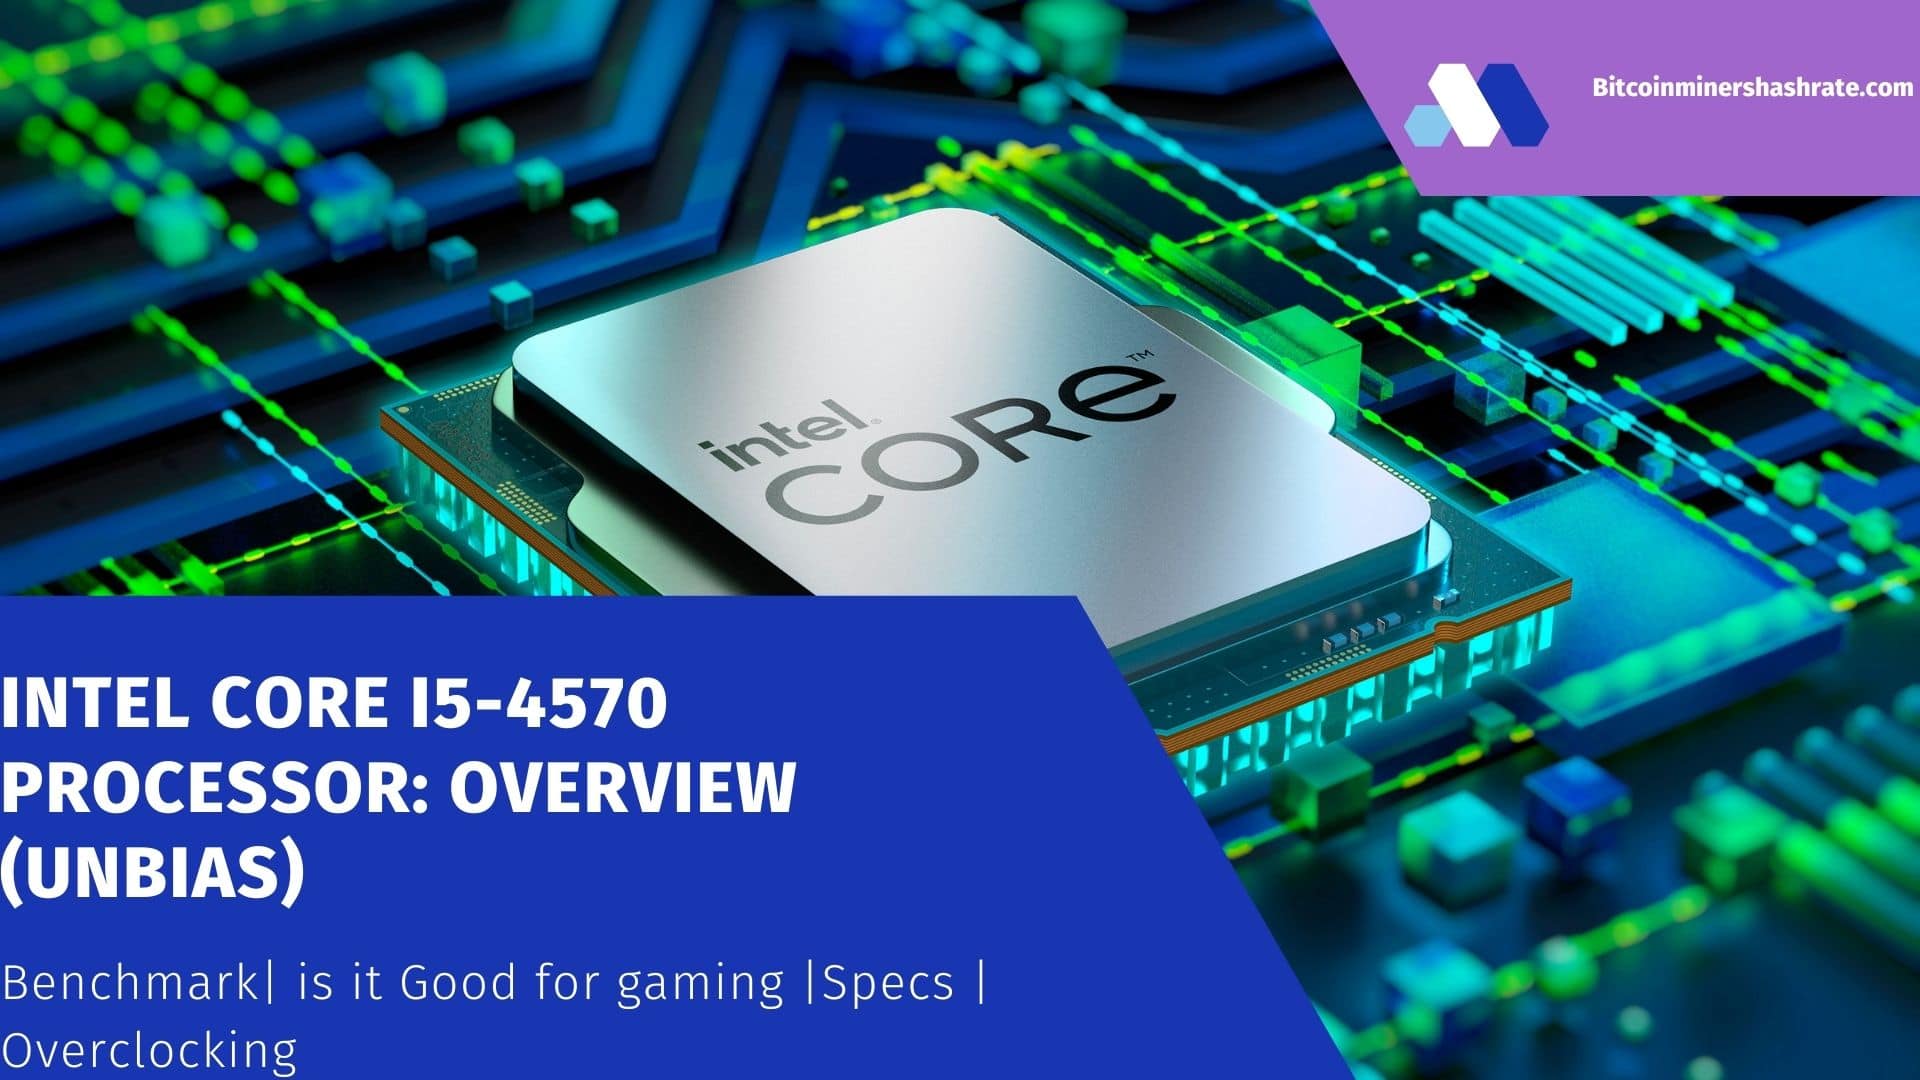 Intel Core i5-4570 Processor